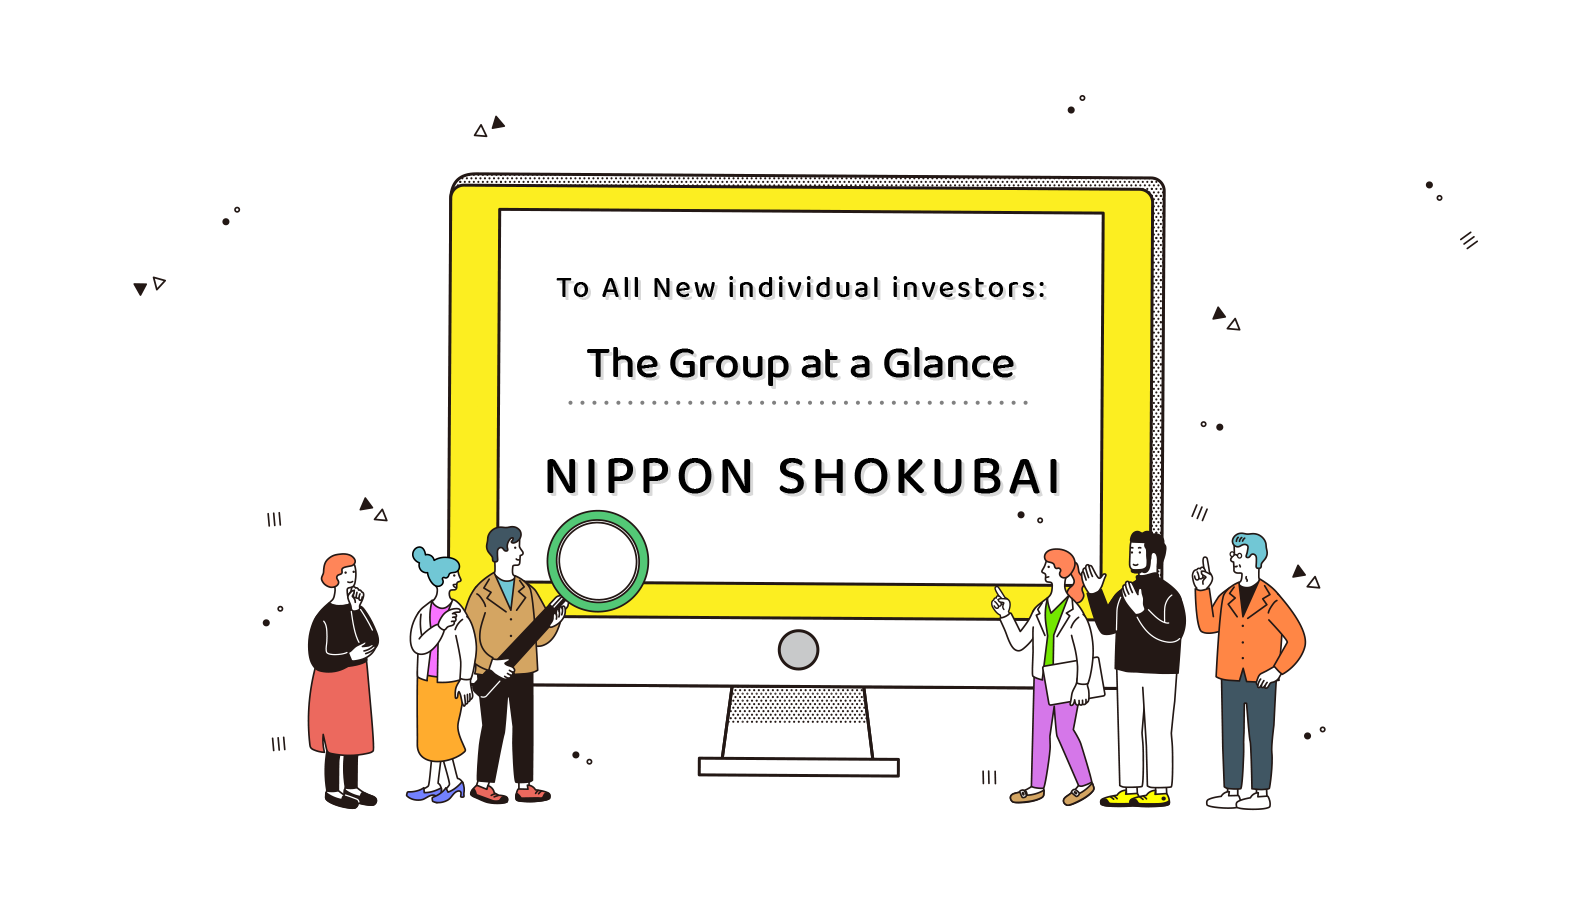 To All New individual investors:The Group at a Glance NIPPON SHOKUBAI